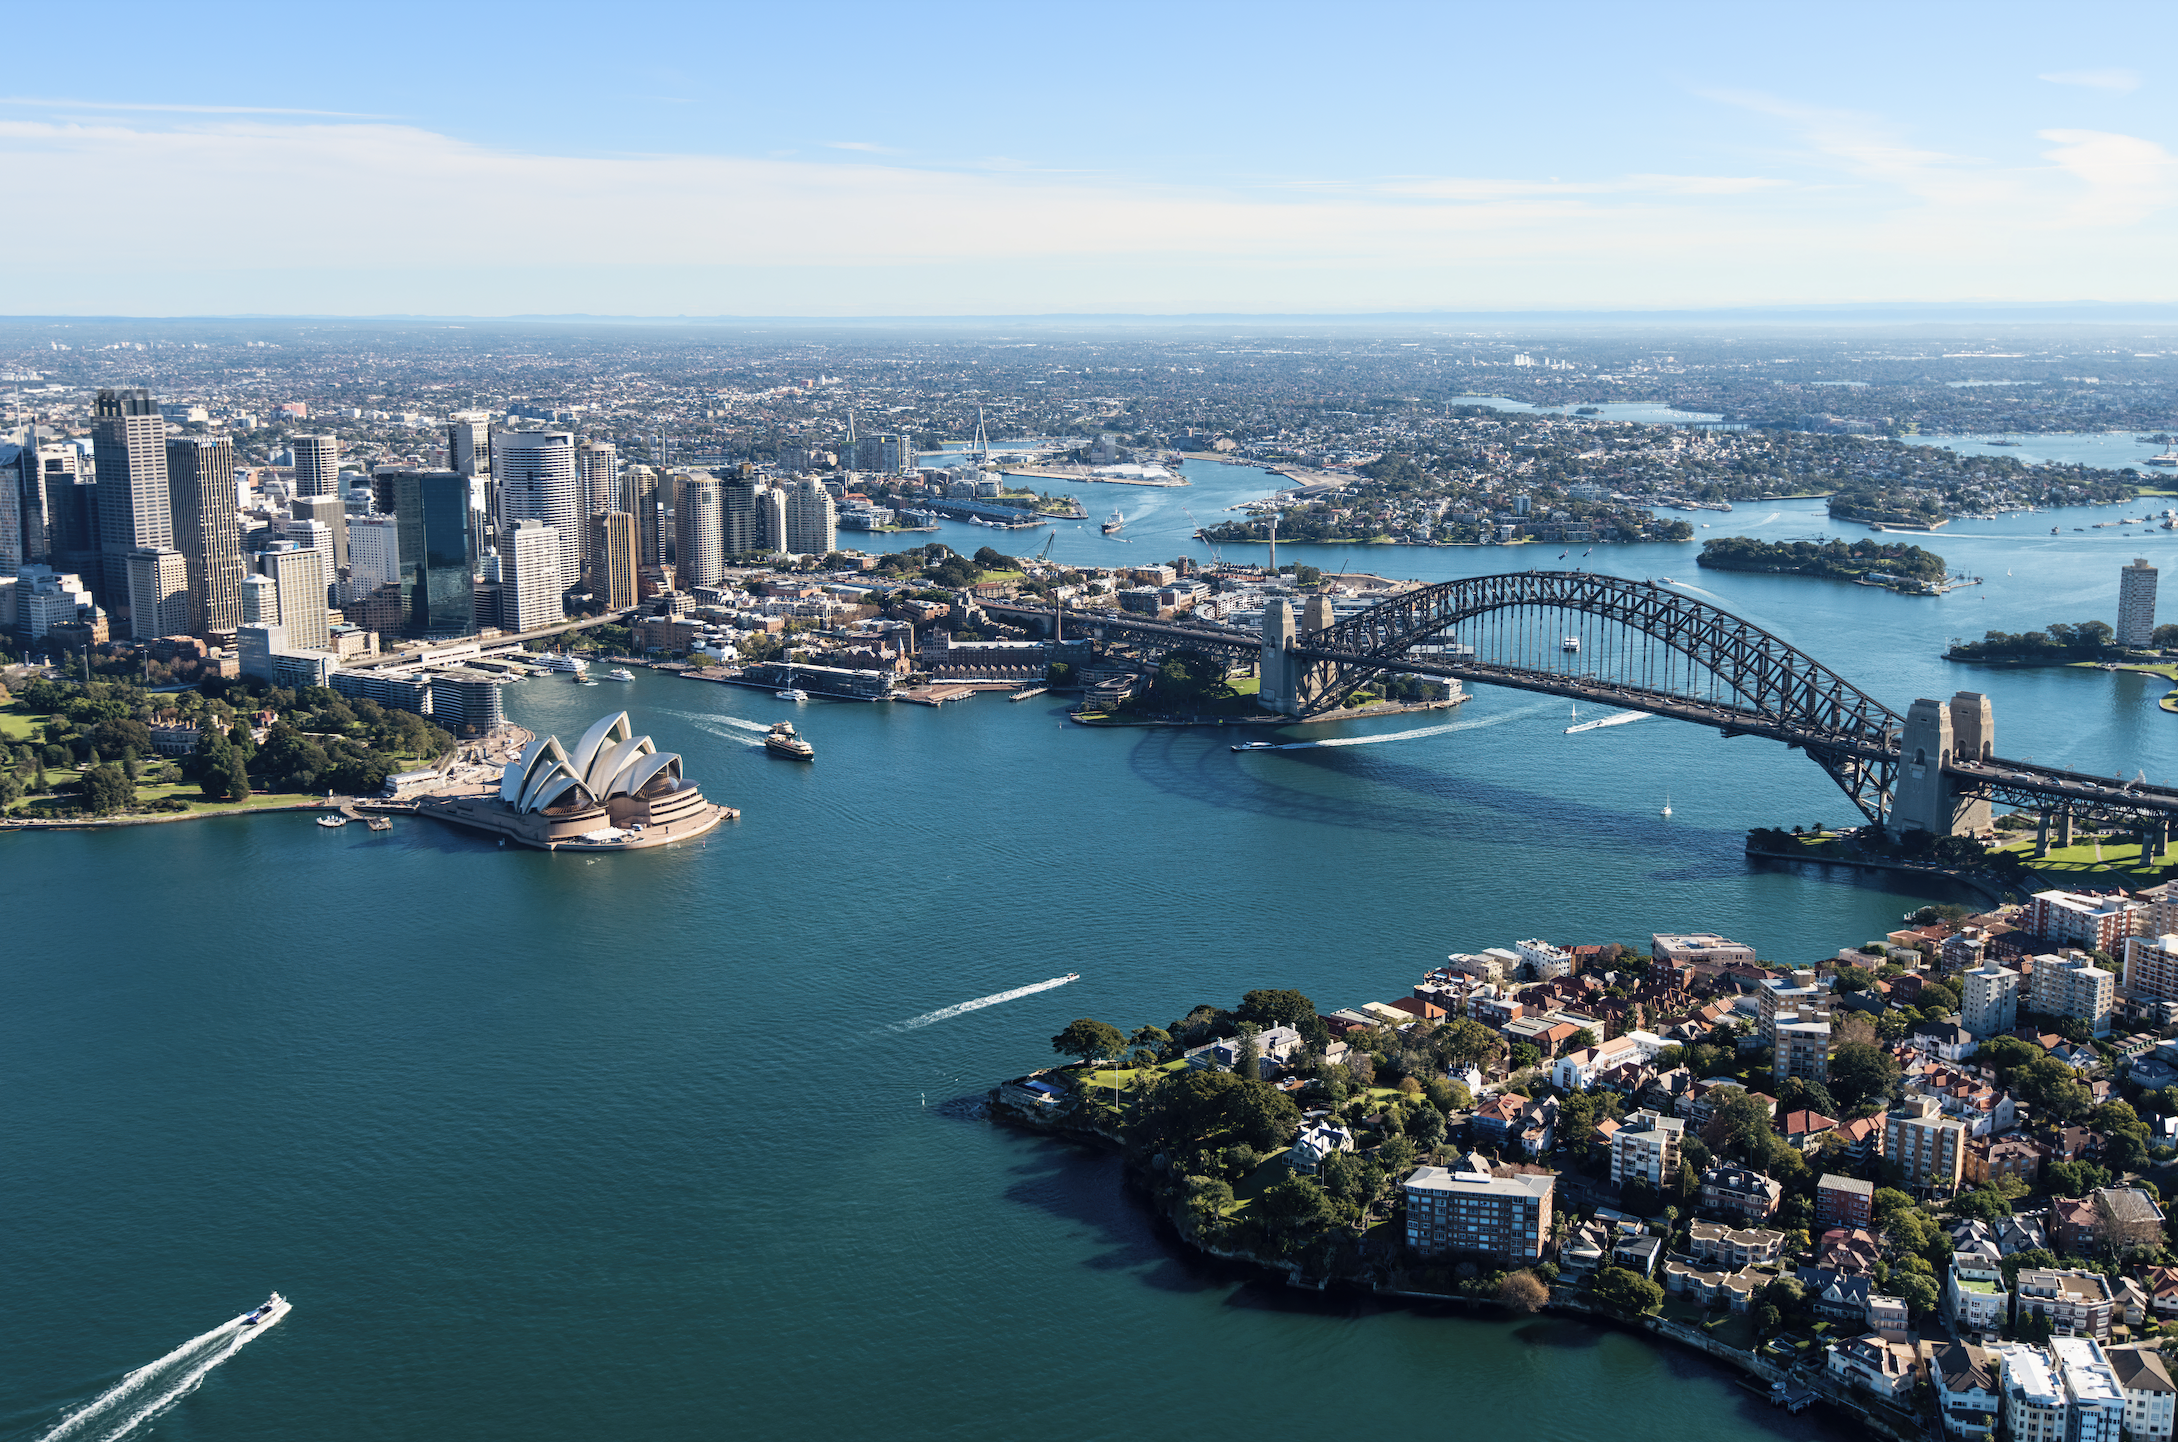 Ariel view of Sydney